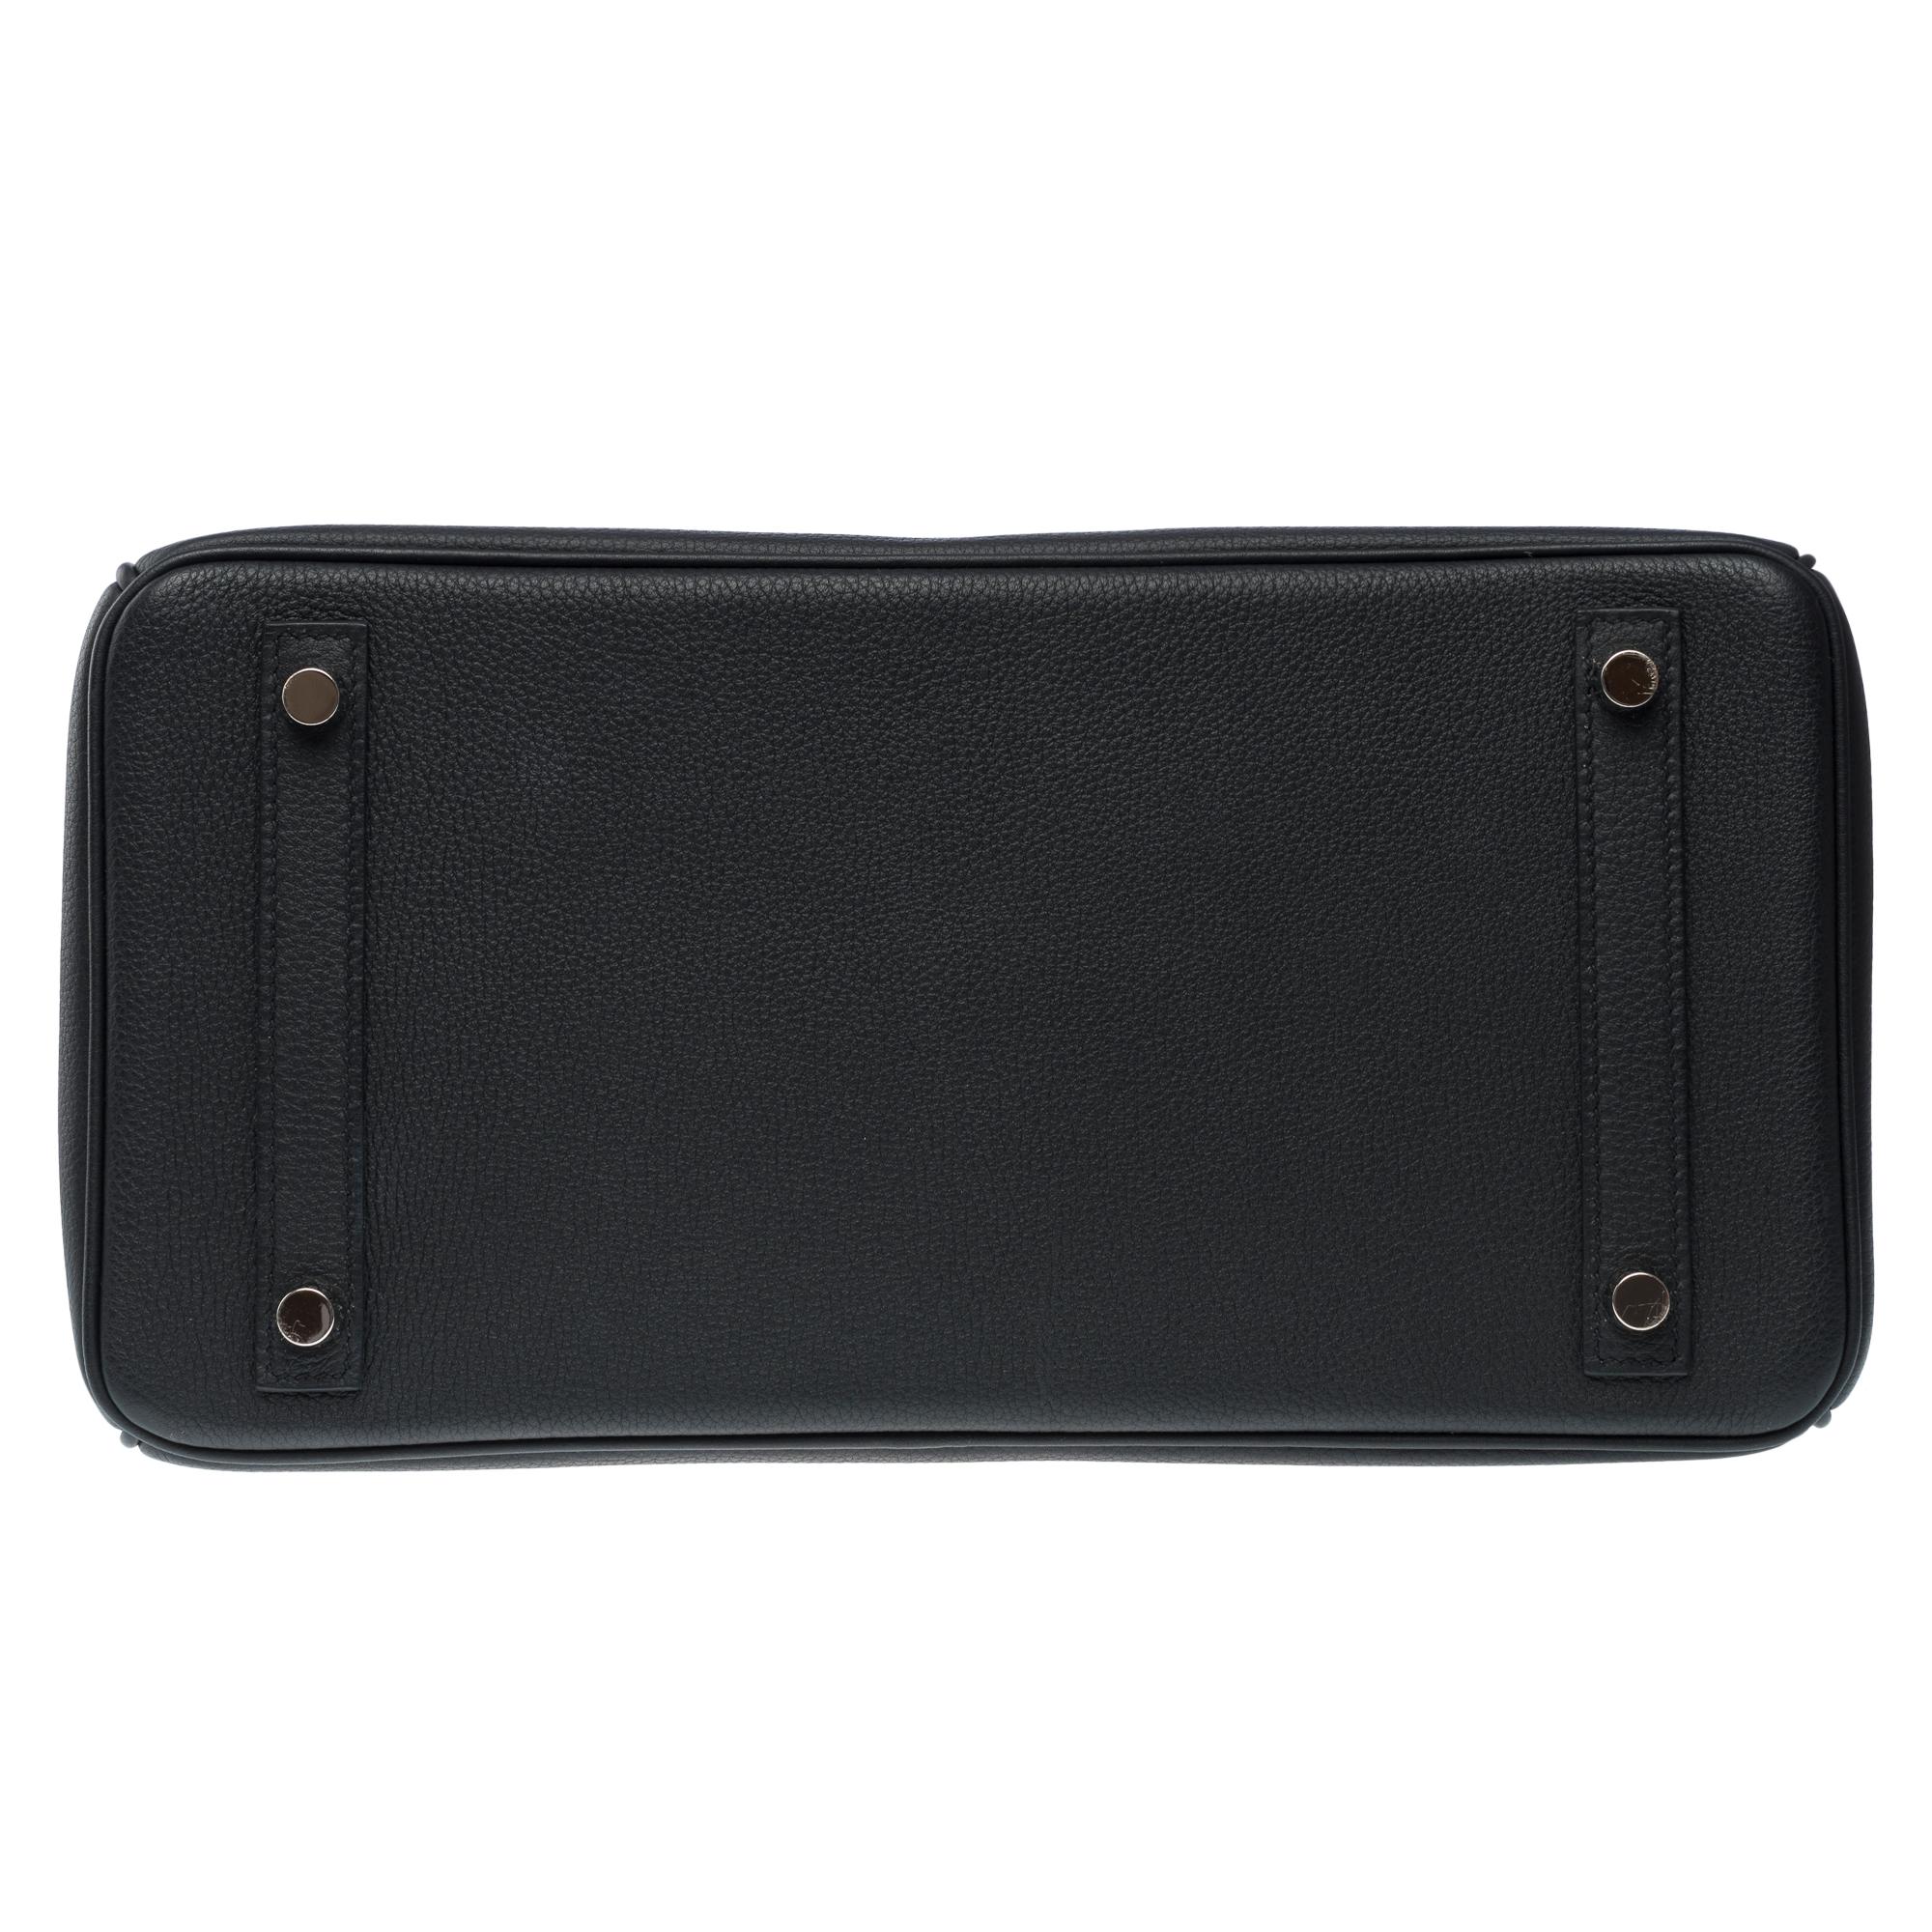 Splendid Hermes Birkin 30 handbag in Black Togo leather, SHW For Sale 6